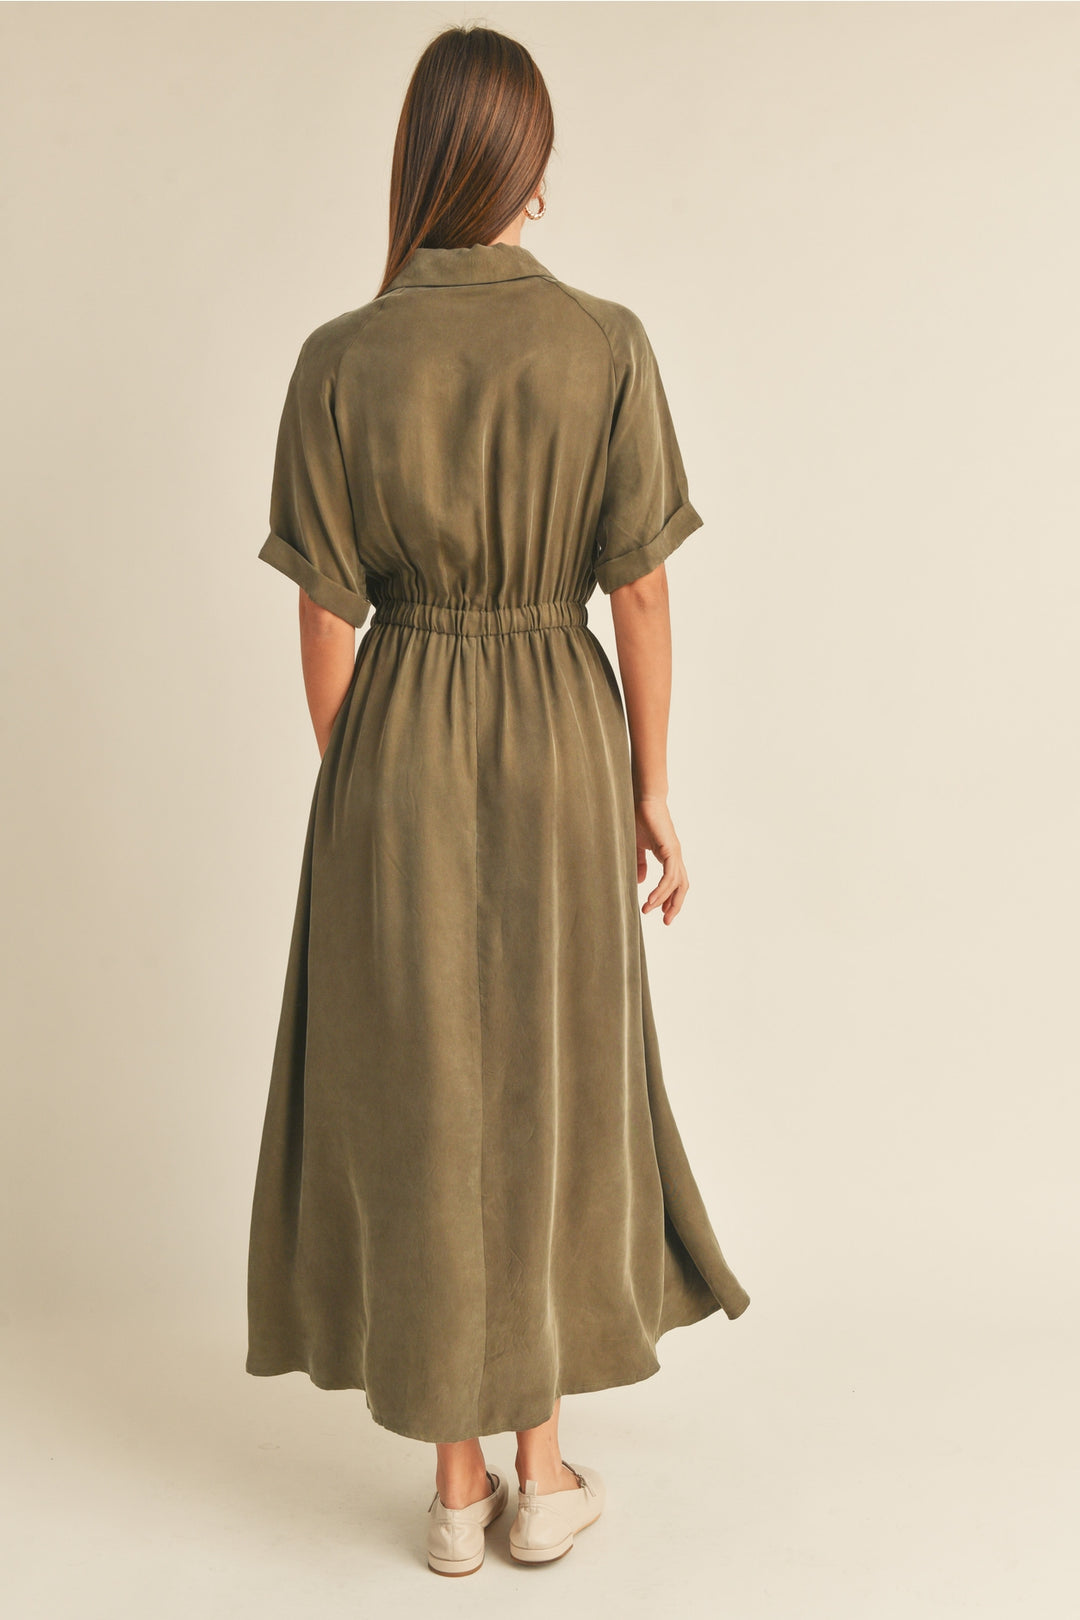 Short Sleeve Viscose with Front Pocket Long Sleeve Dress - Olive